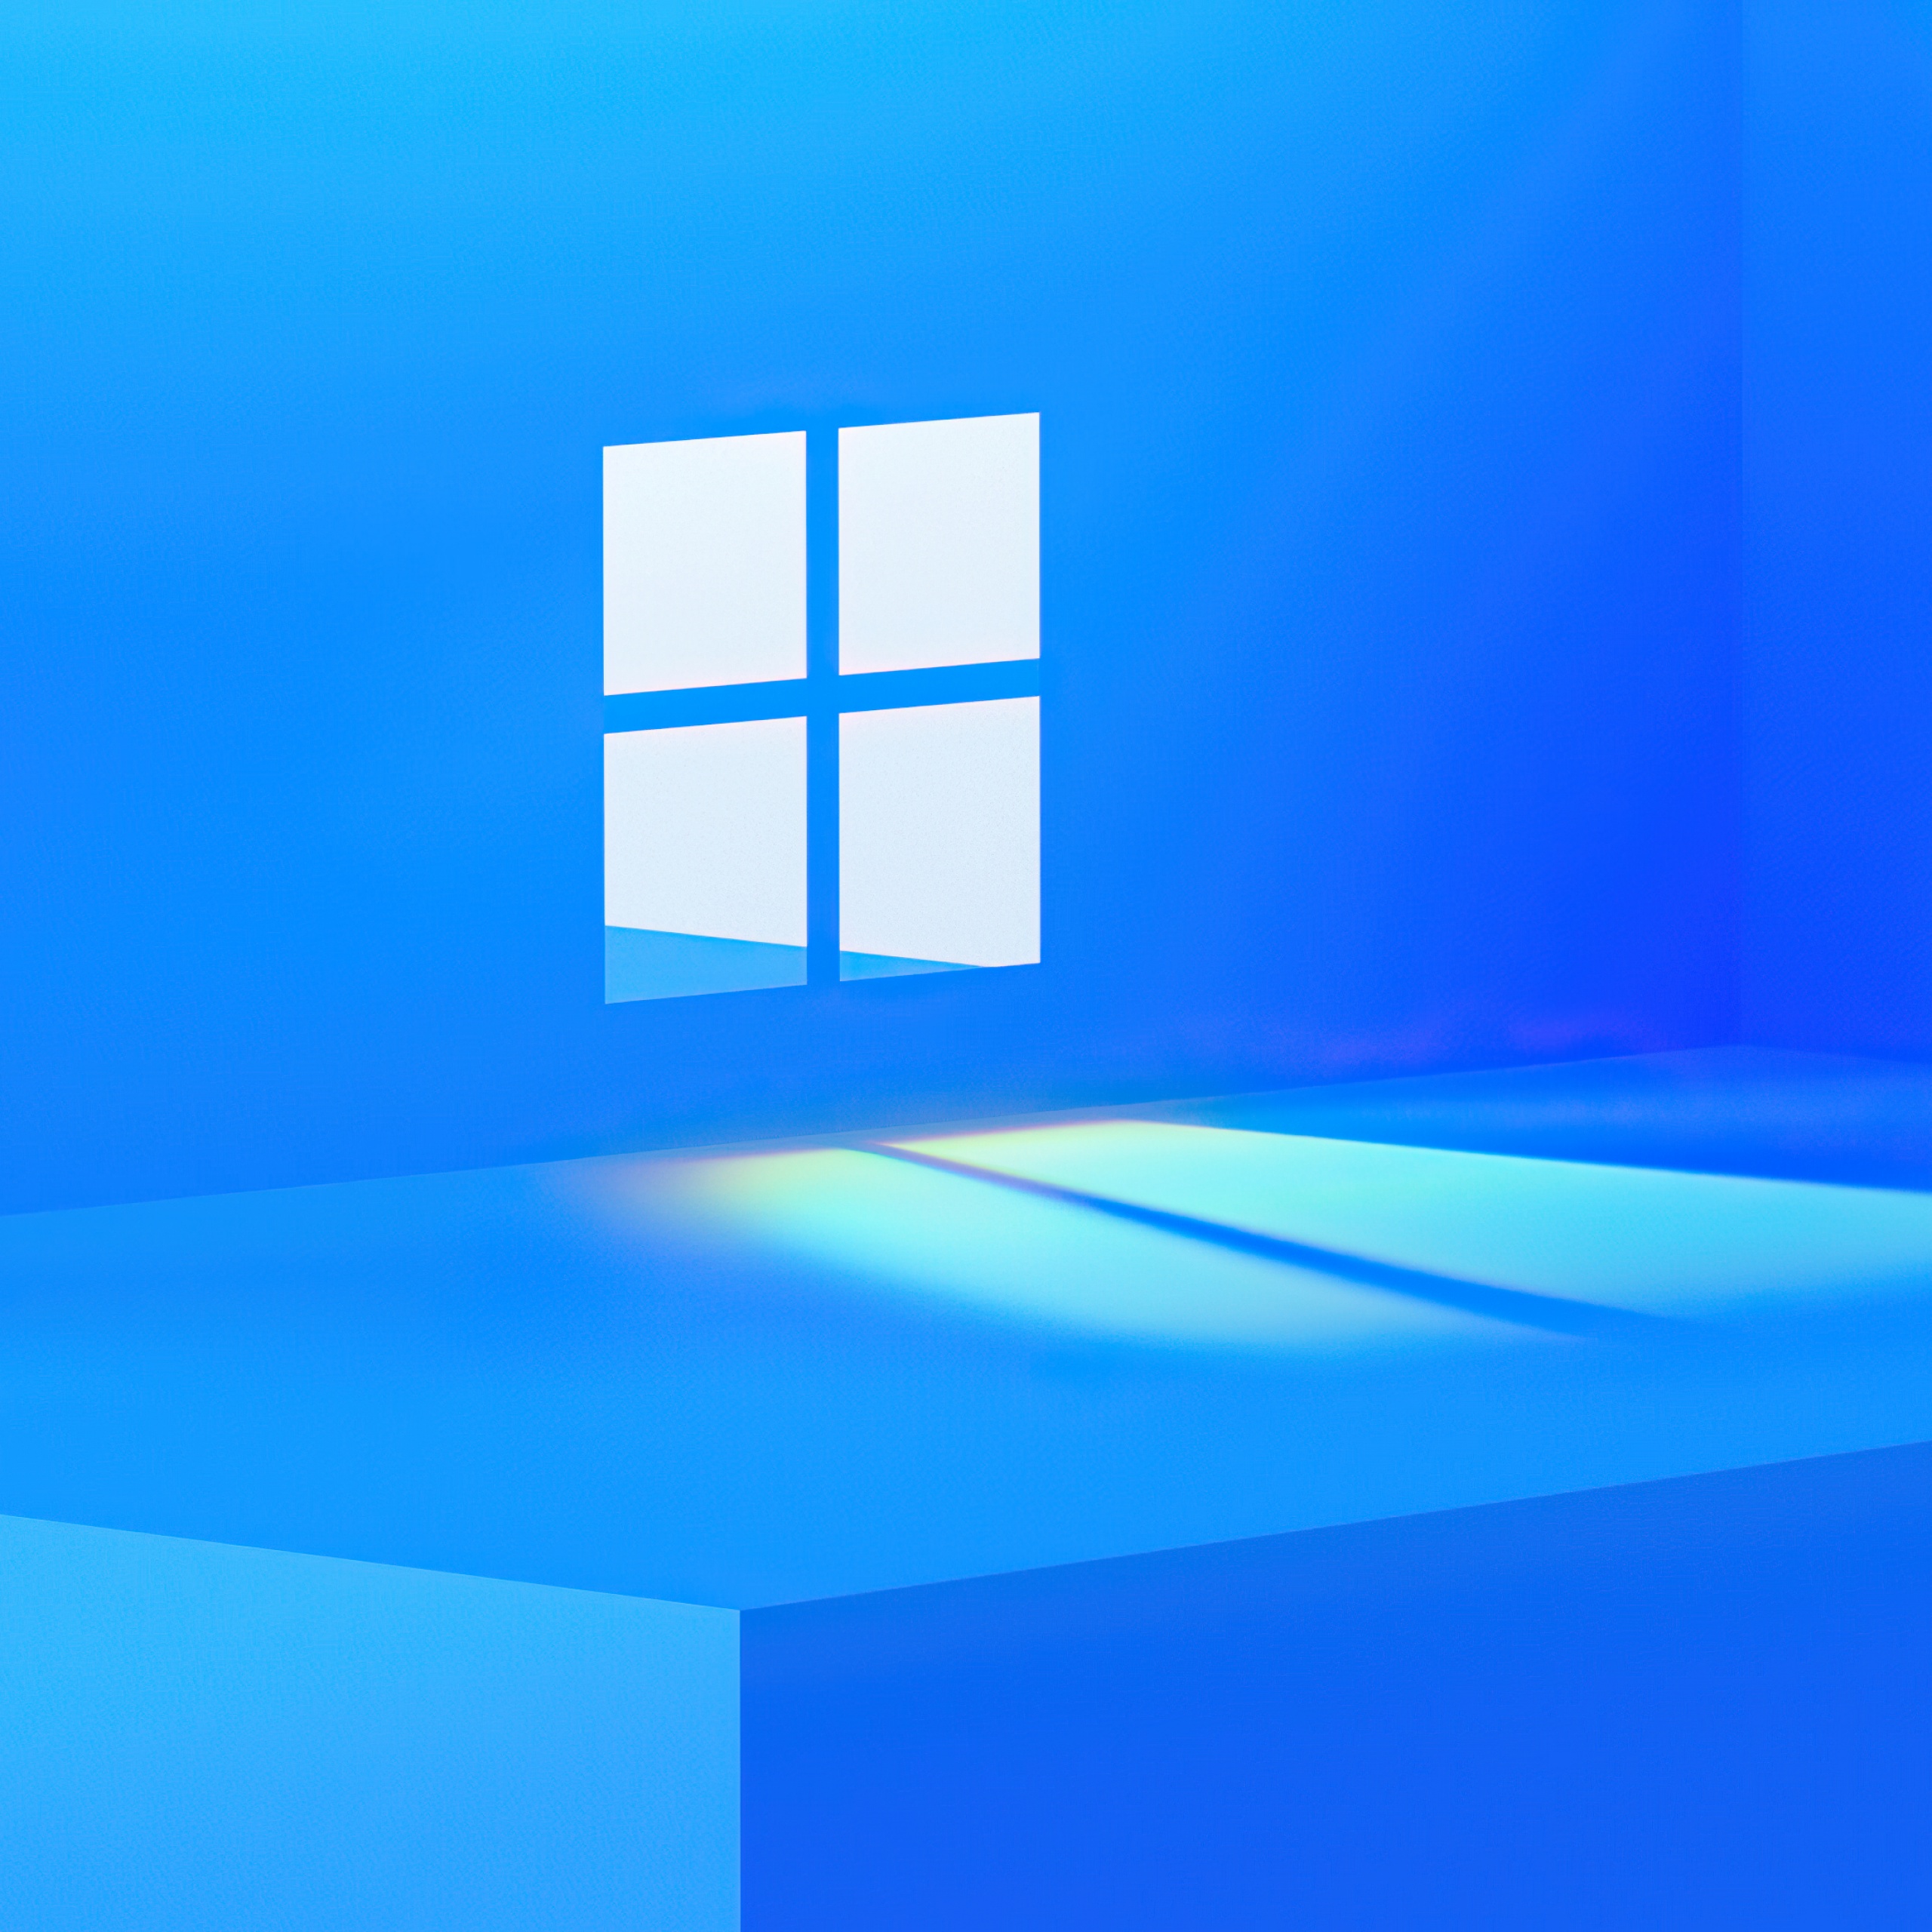 Windows 11 Wallpaper 4K, Stock, Official, Blue background, Windows logo ...